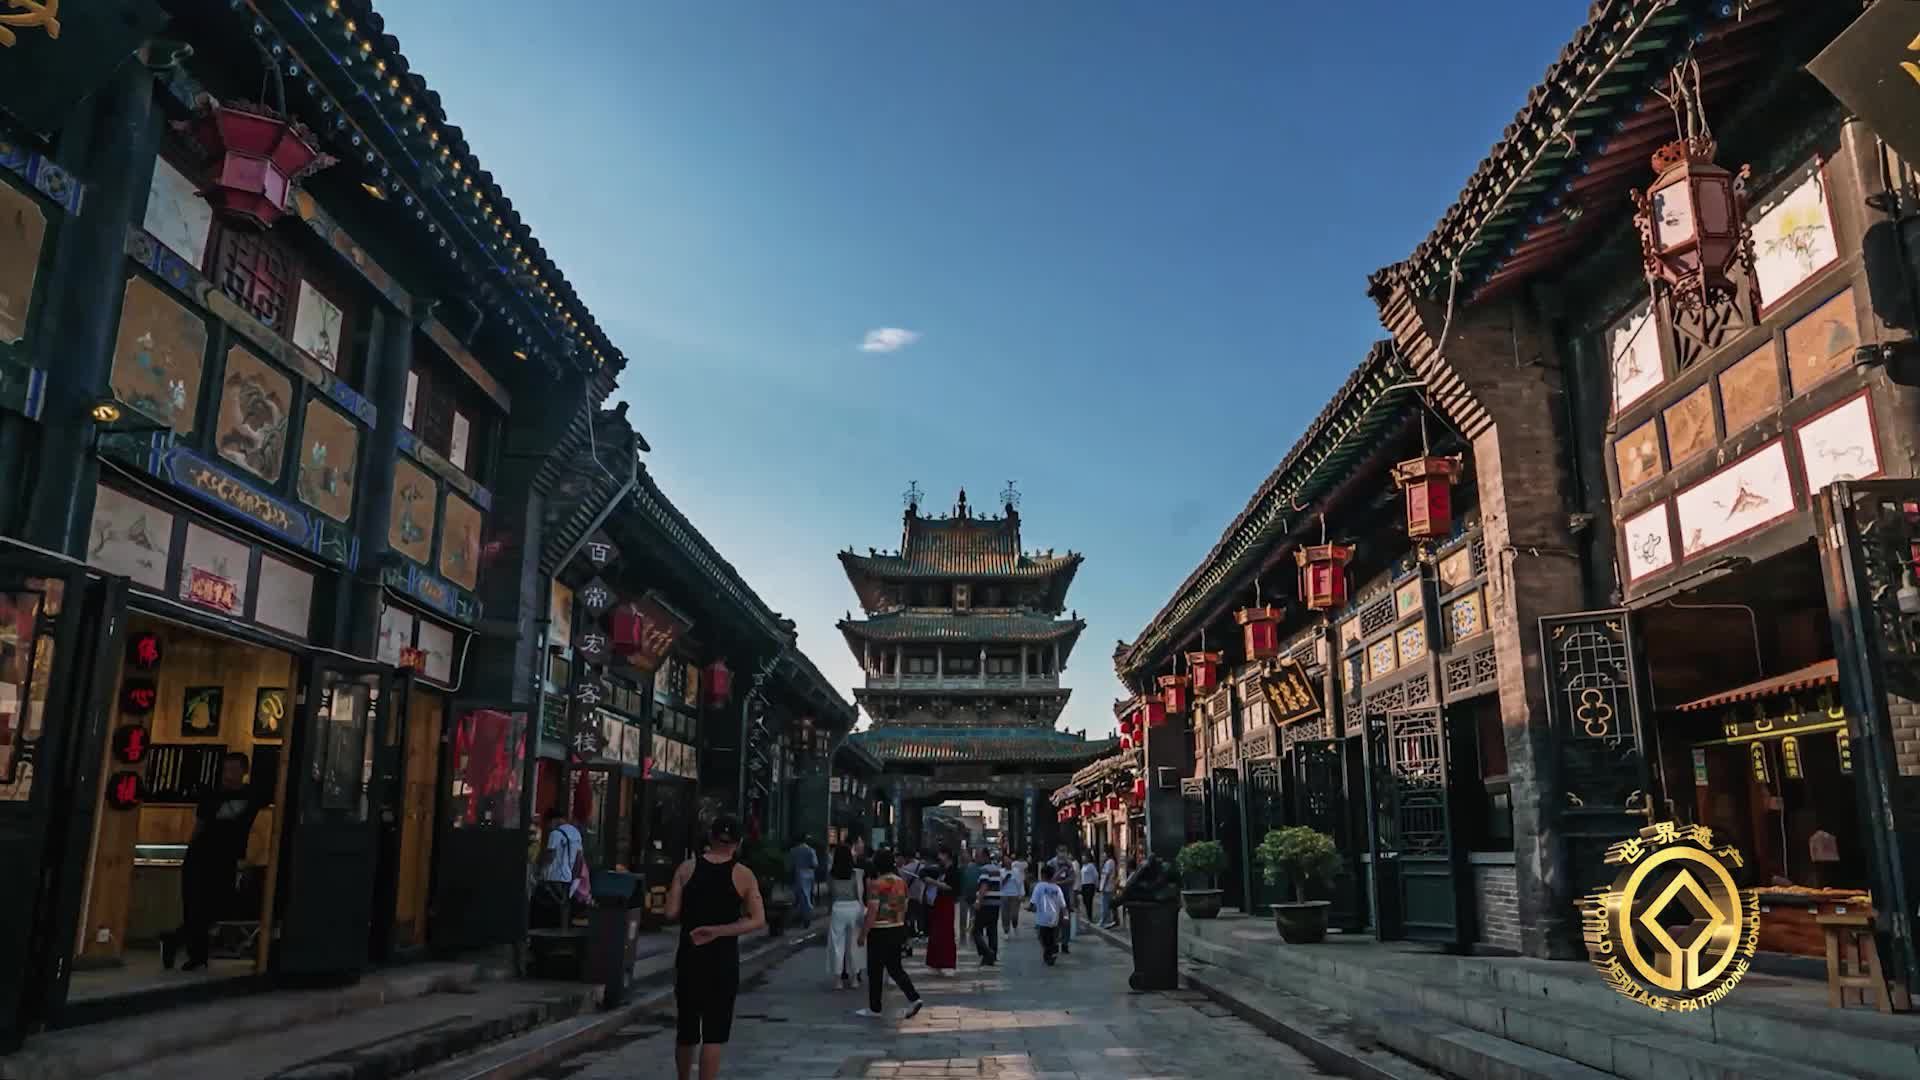 shanxi pingyao ancient city